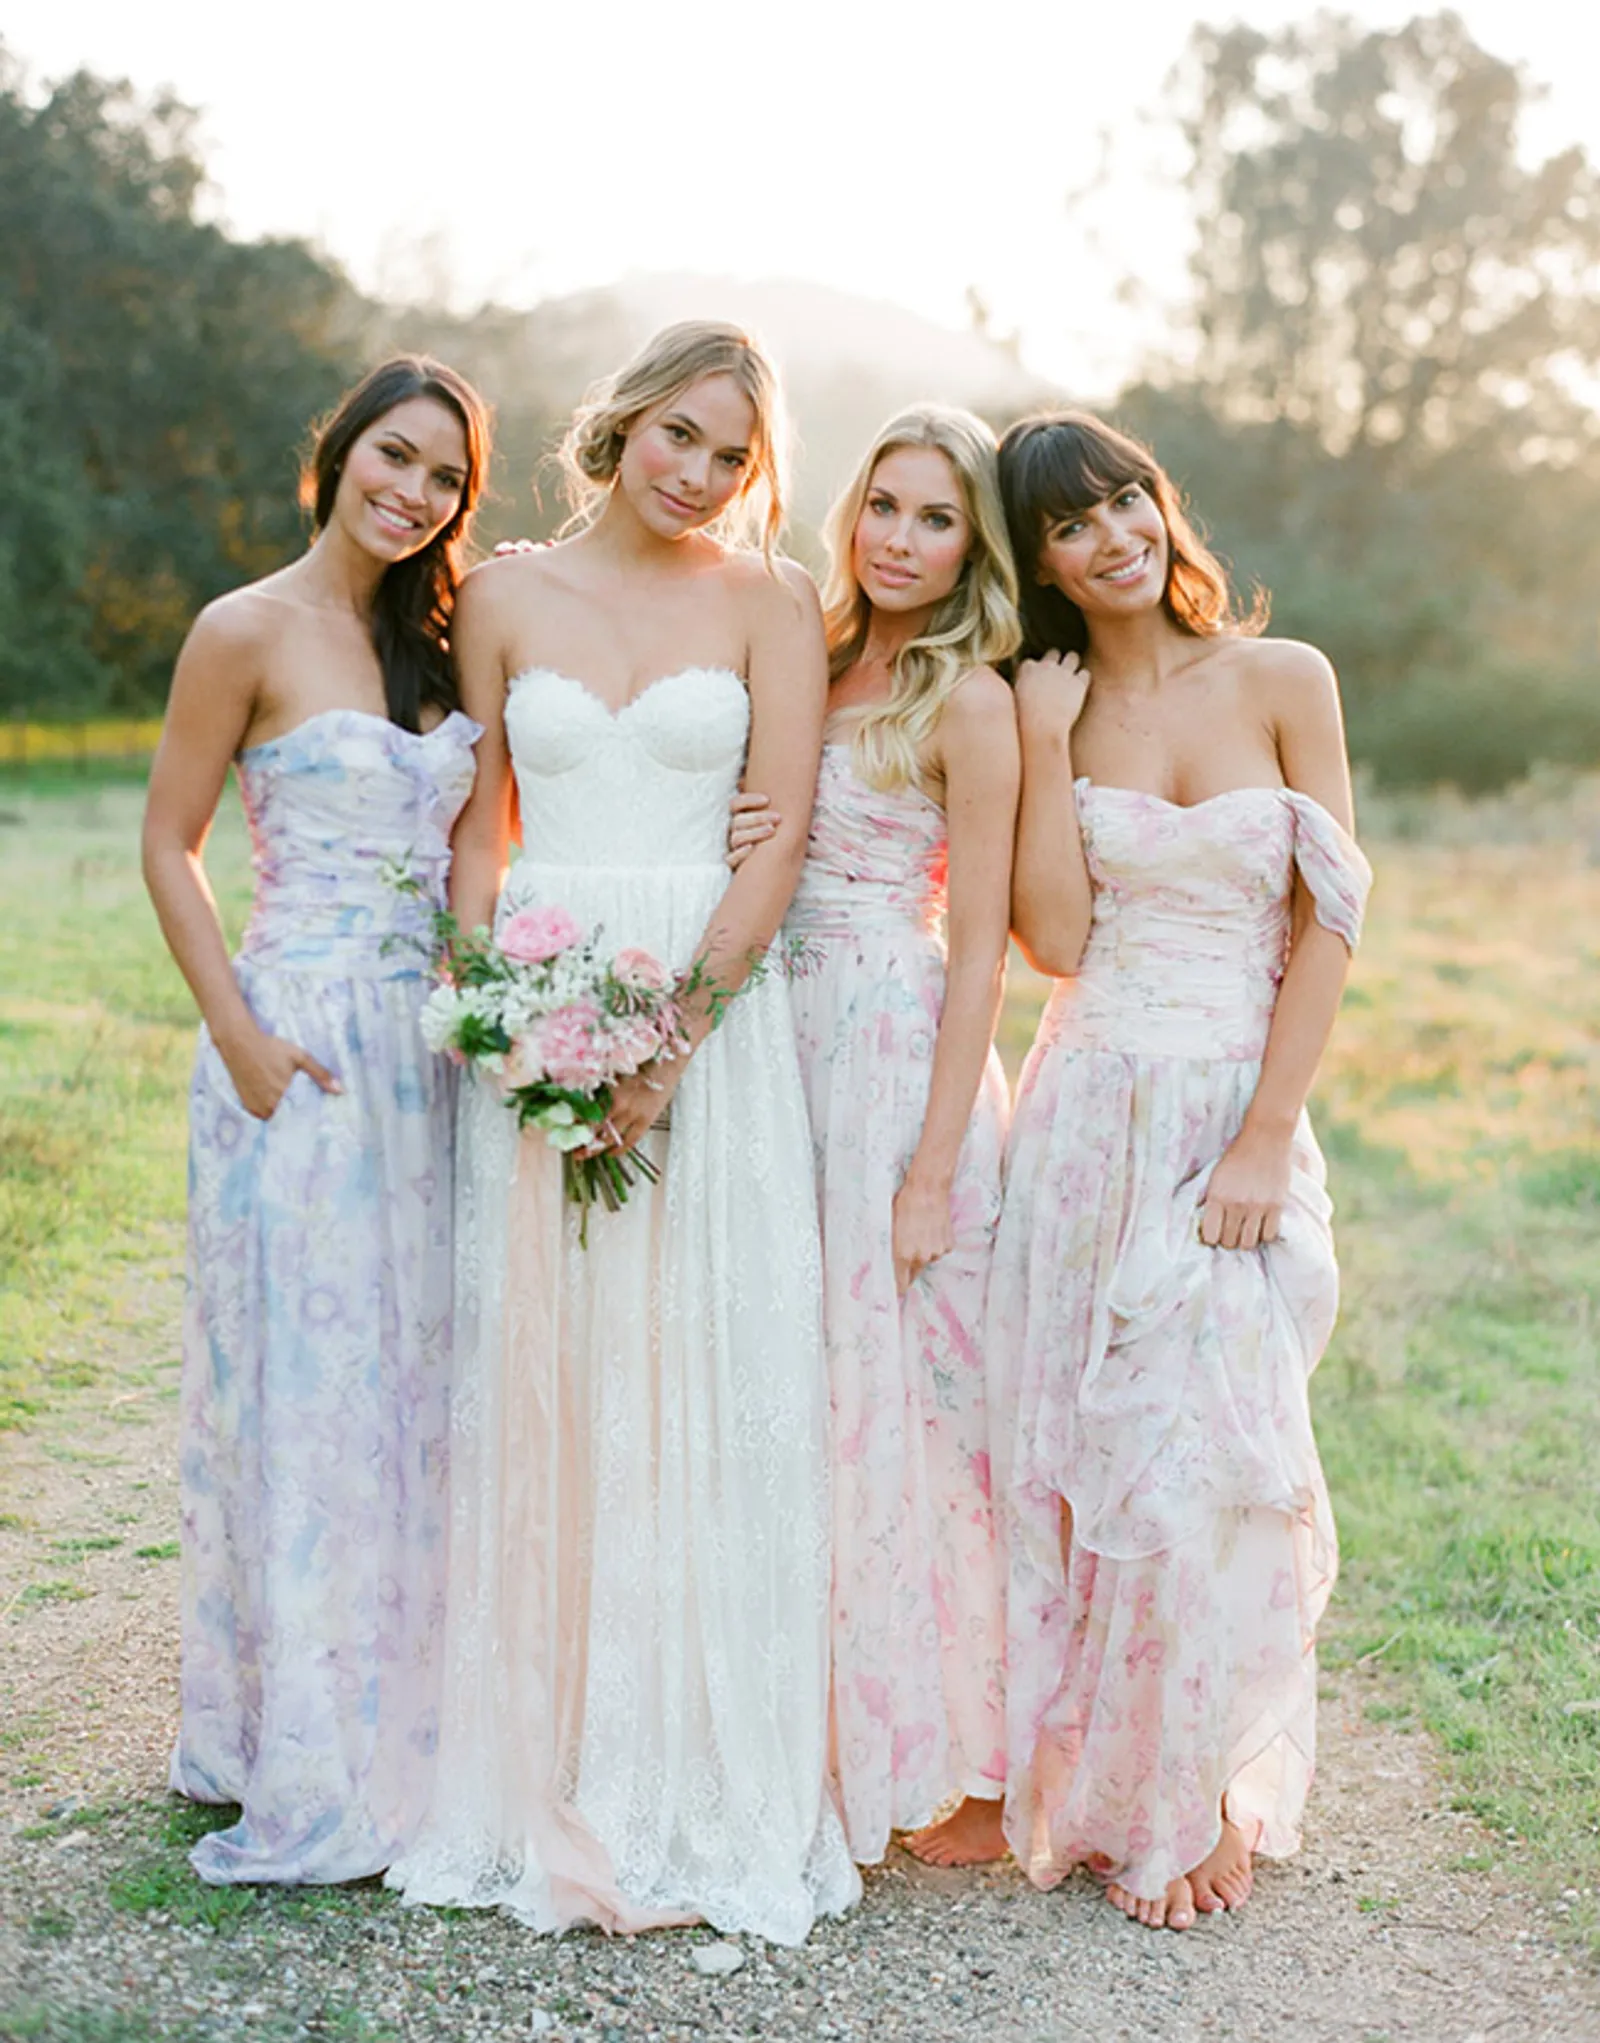 Inspirasi Warna Gaun Bridesmaid yang Cocok untuk Garden Party